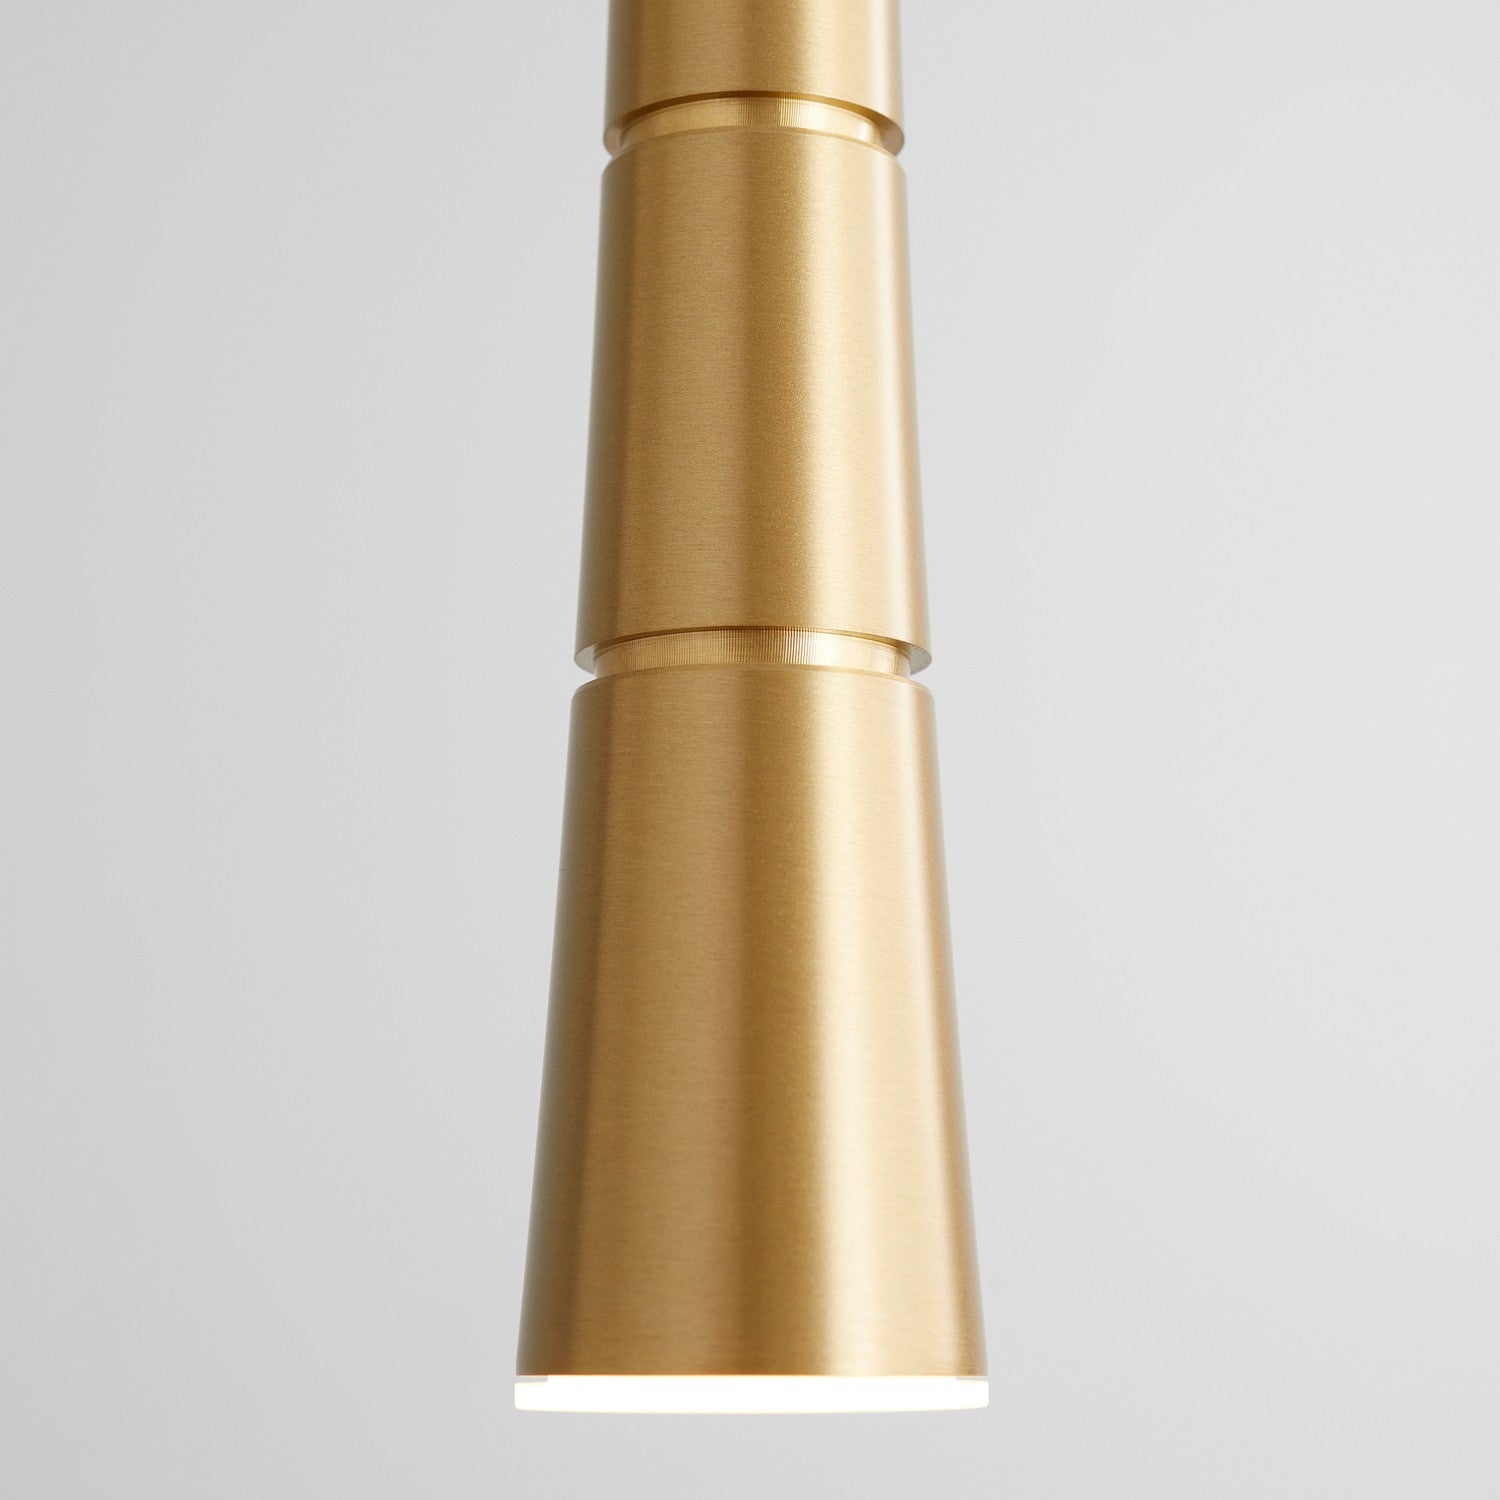 Oxygen Sabre 3-6004-40 Modern Pendant - Aged Brass